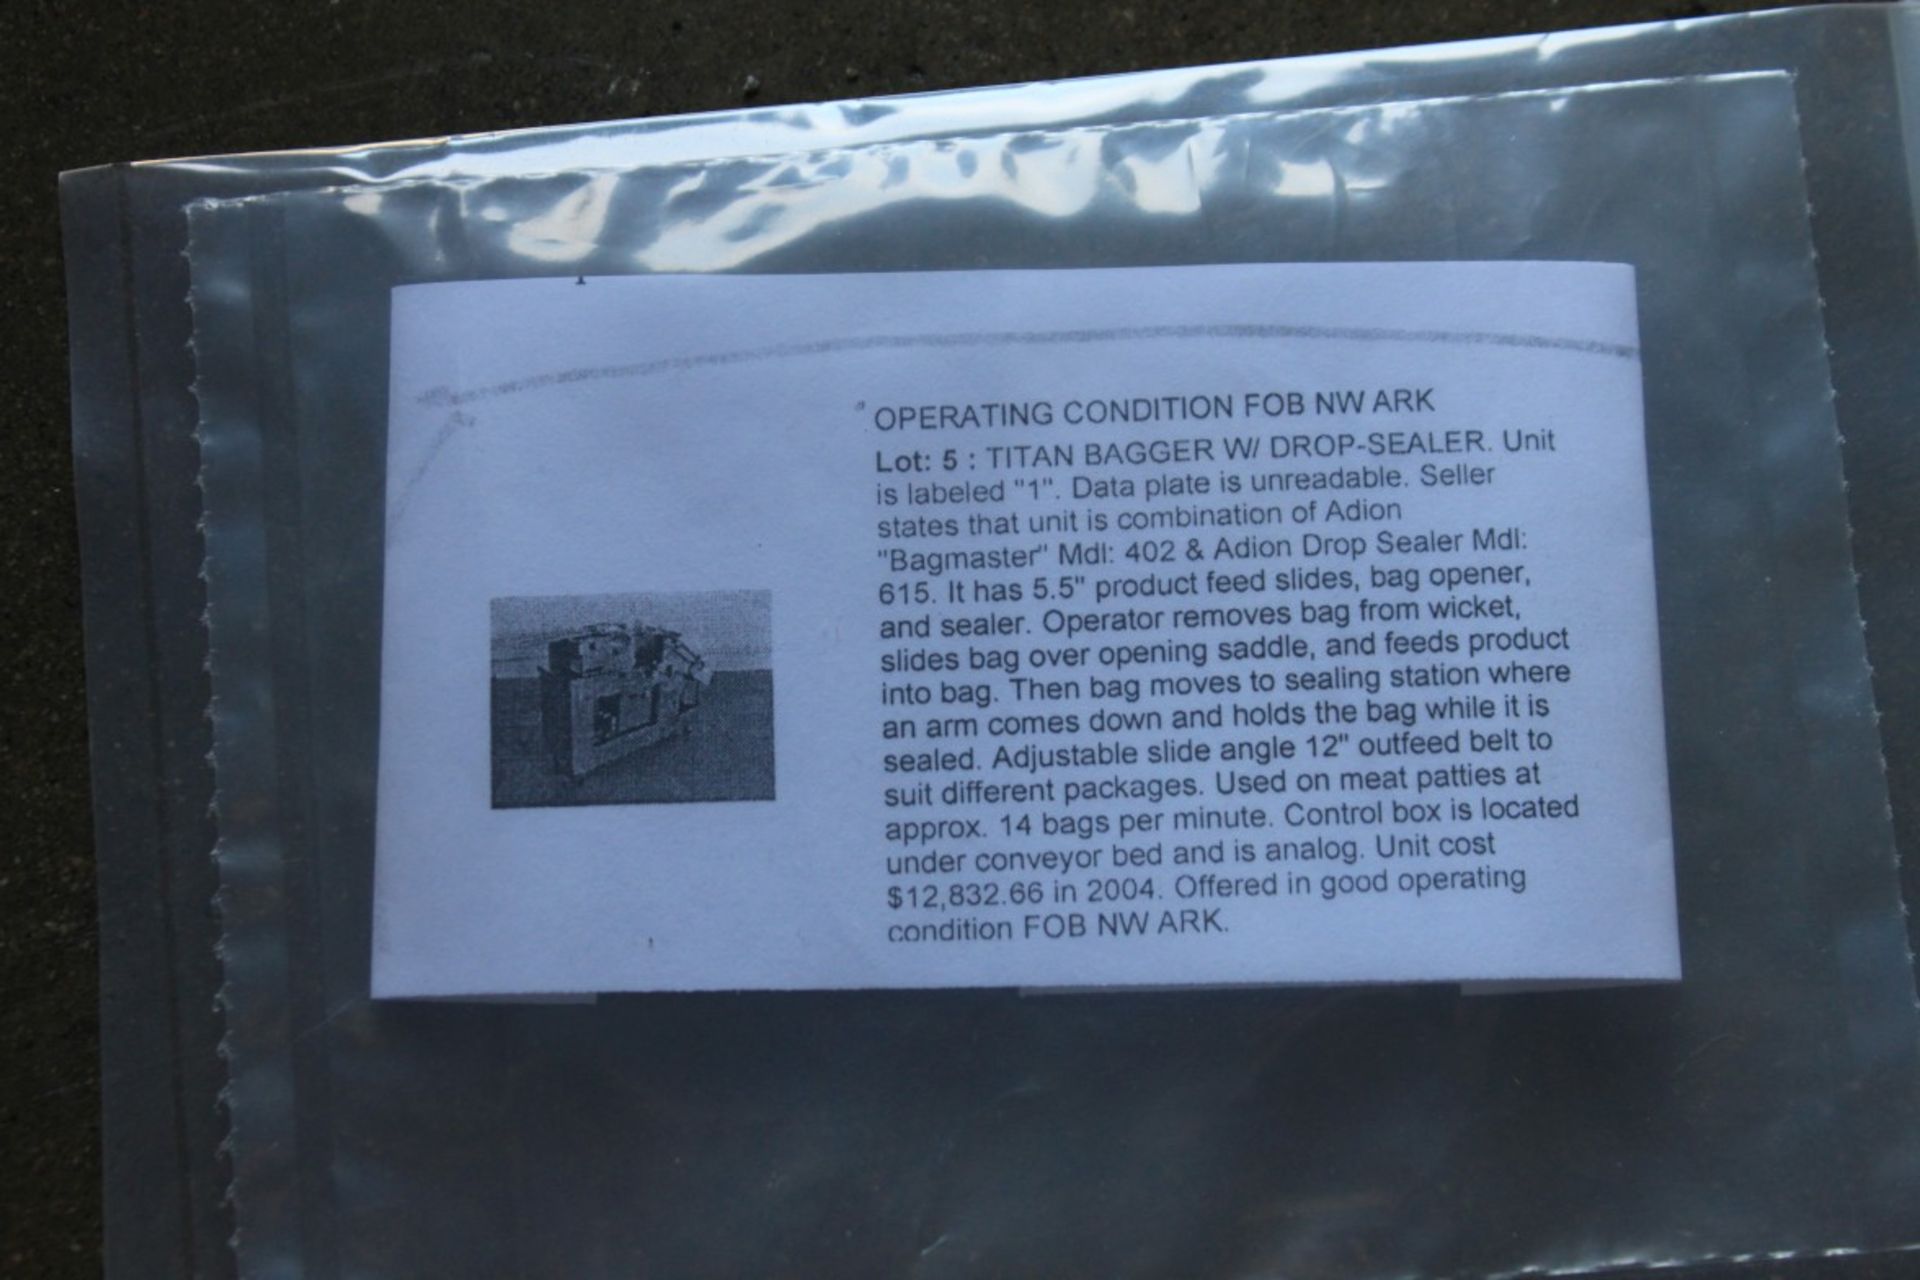 Titan Bagger w/ Drop-Sealer (See Description Photo) (Located at 13938 Fox Street, San Fernando, CA) - Image 3 of 3